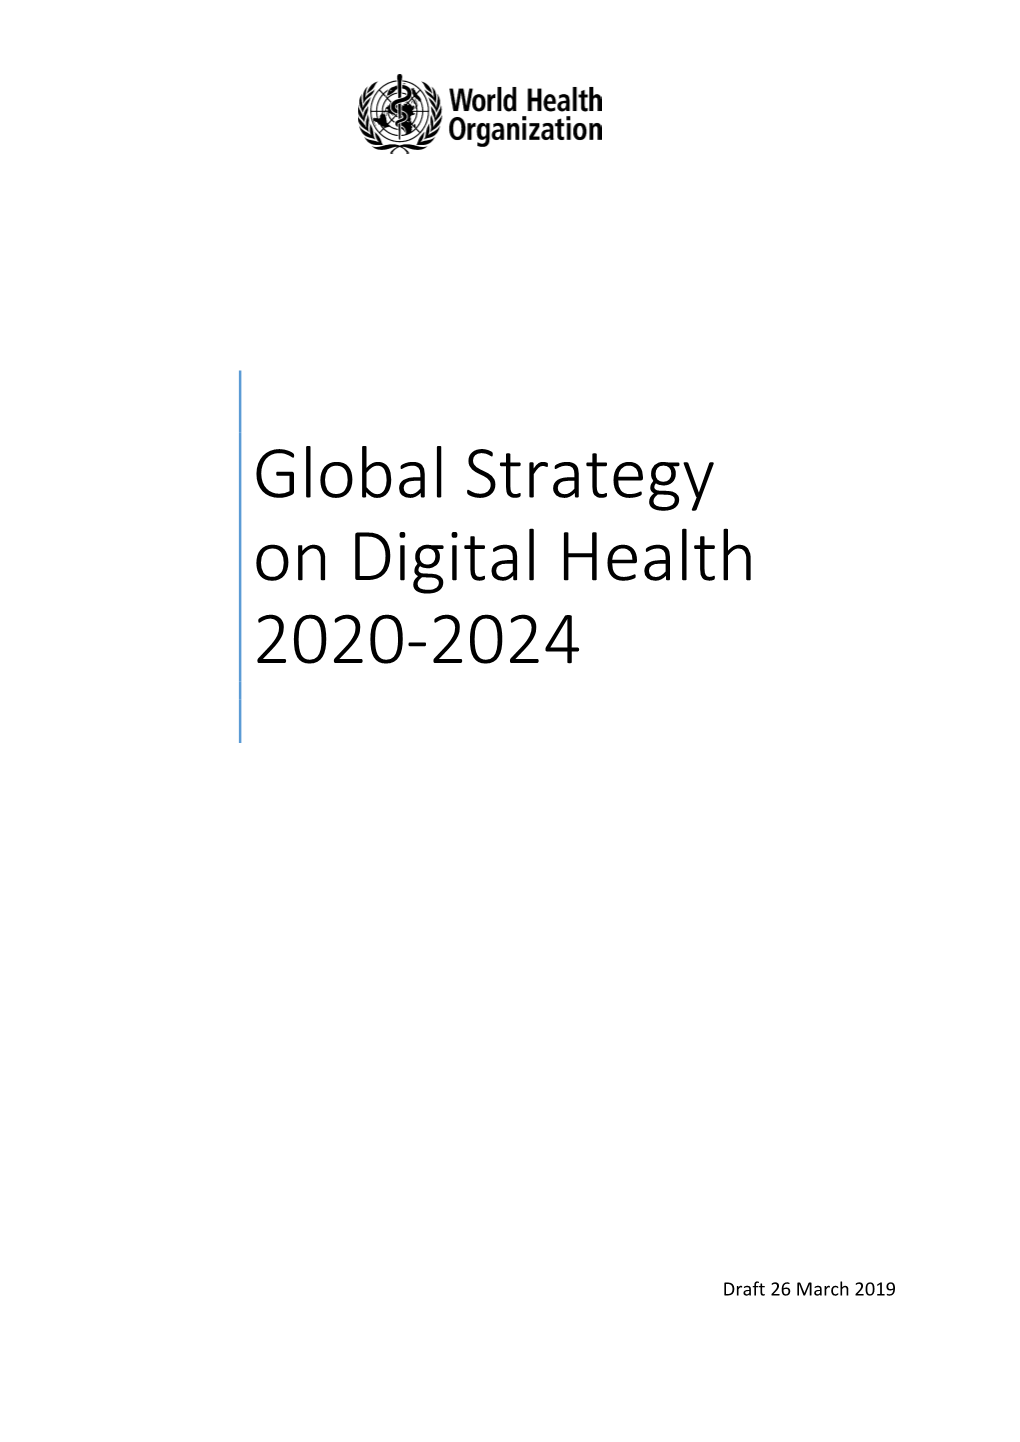 Global Strategy on Digital Health 2020-2024